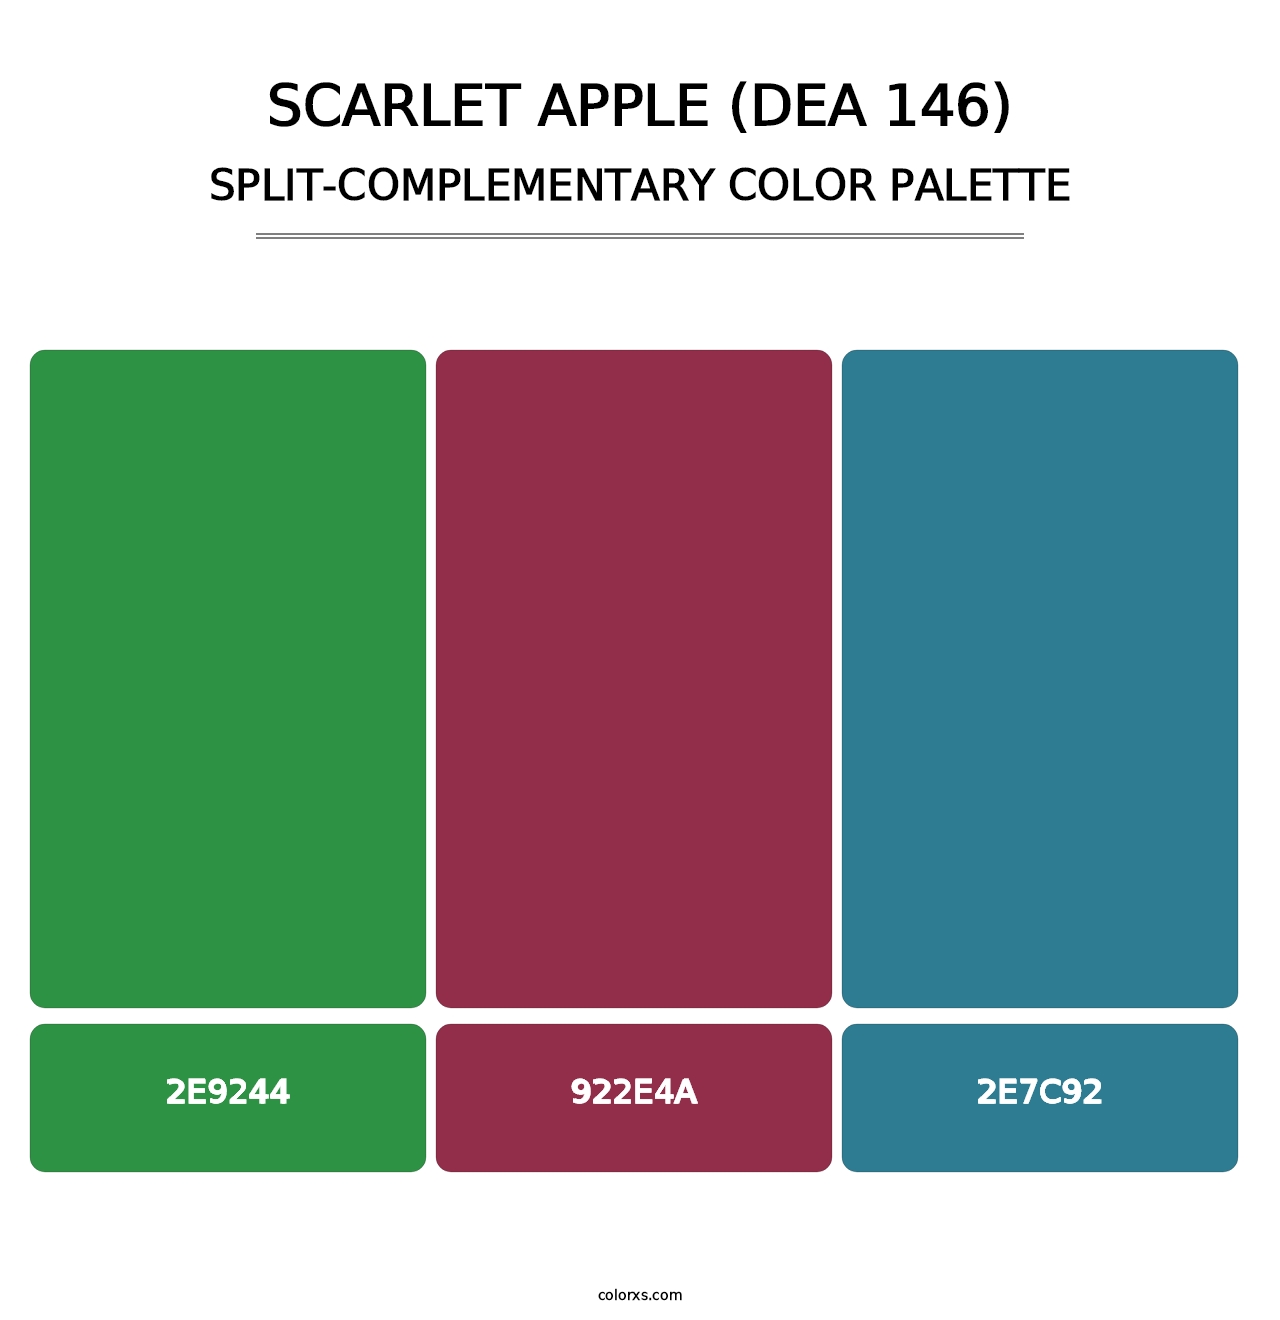 Scarlet Apple (DEA 146) - Split-Complementary Color Palette